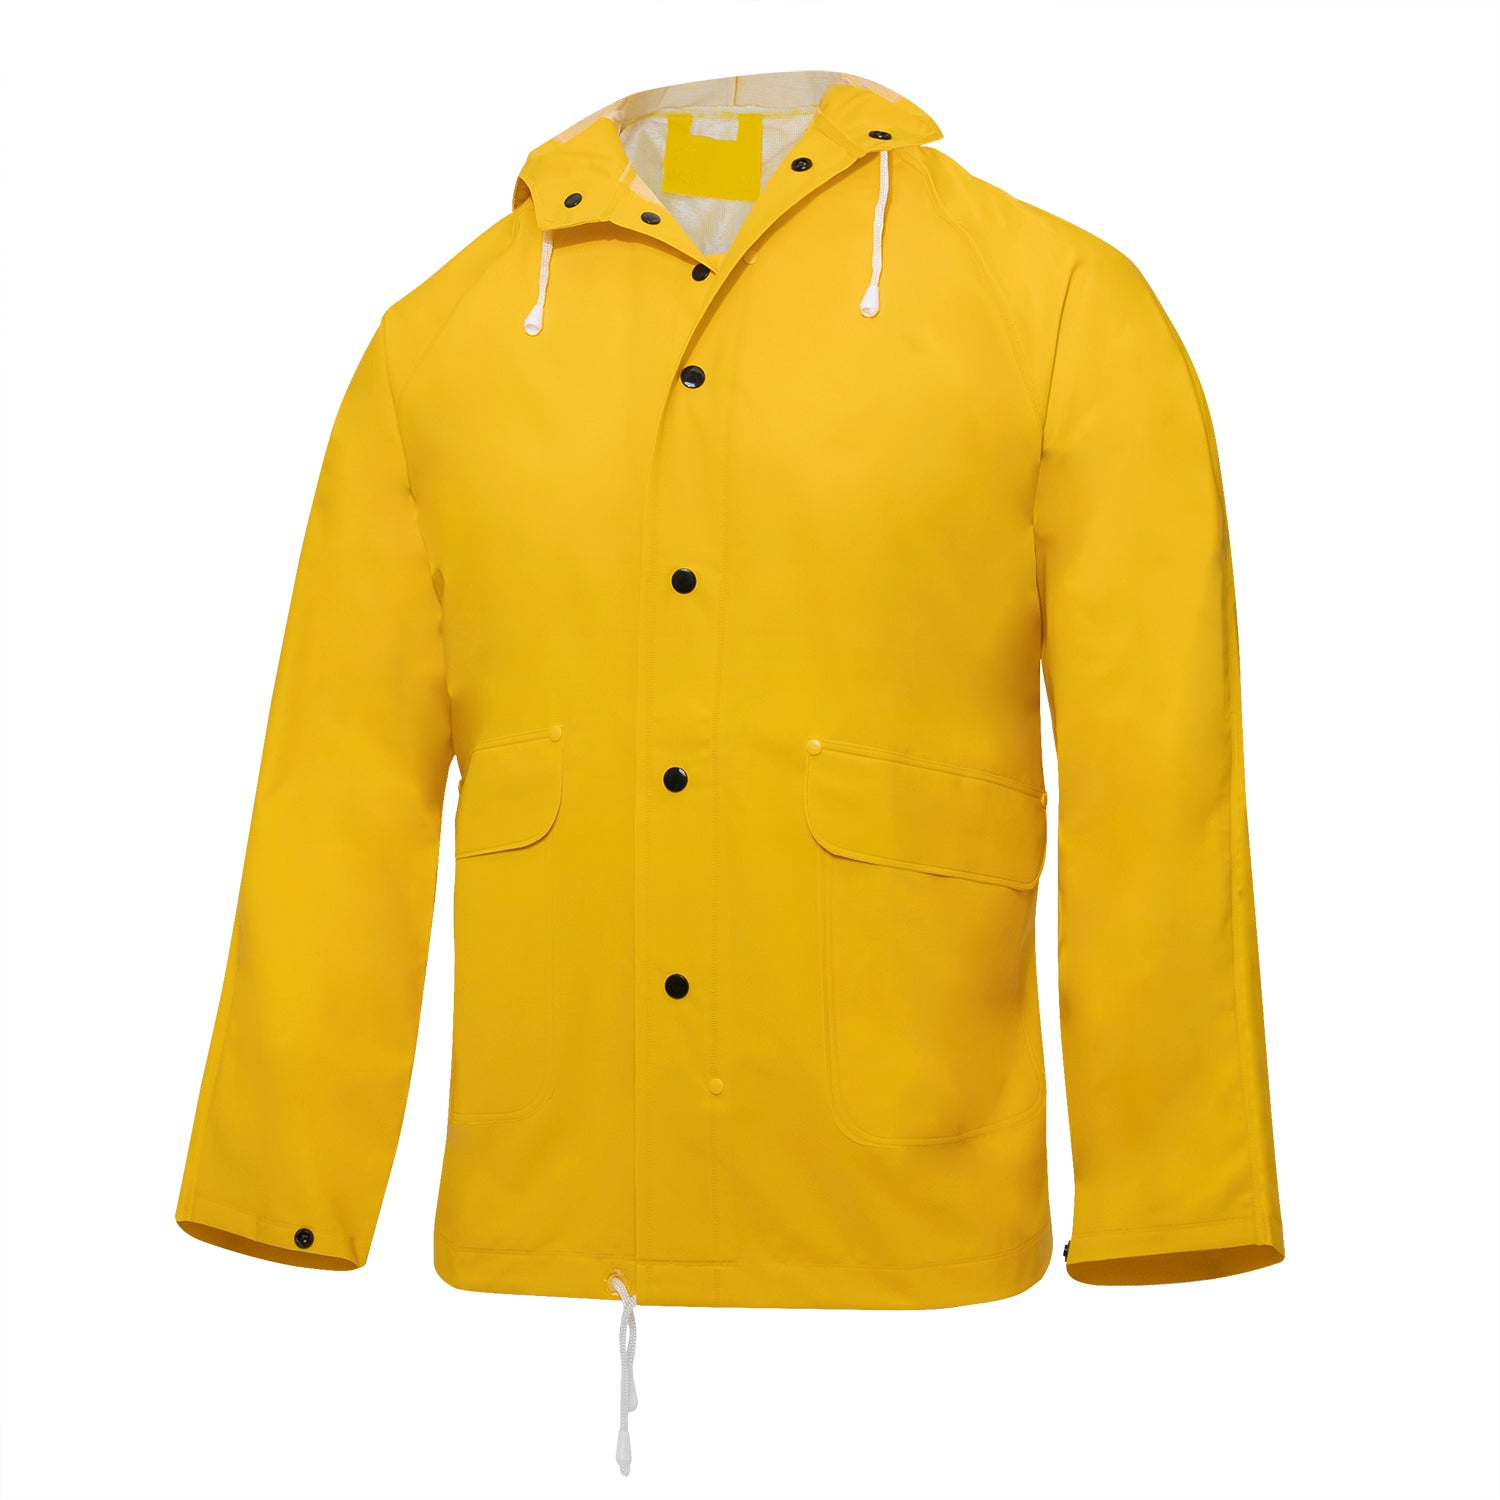 Milspec Yellow Rain Jacket Rain Suits & Jackets MilTac Tactical Military Outdoor Gear Australia